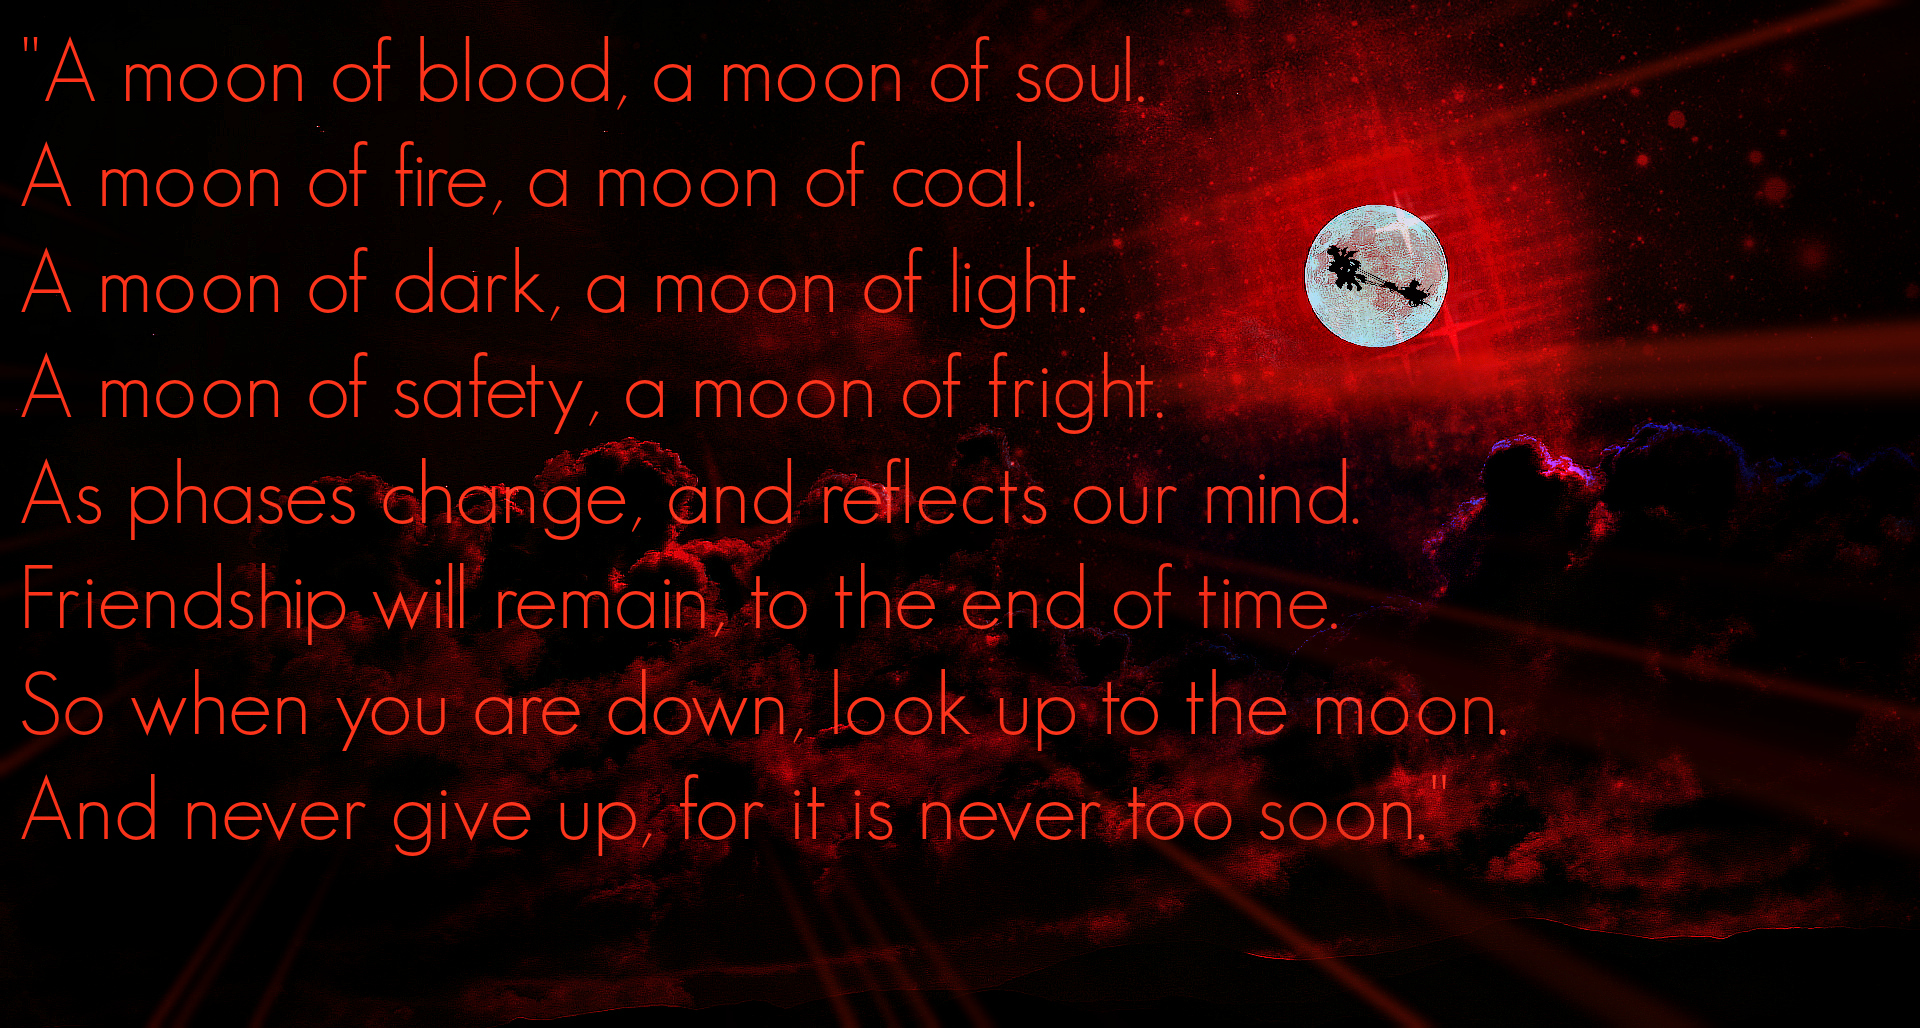 Poem Of The Blood Moon by ConnieTheCasanova on DeviantArt